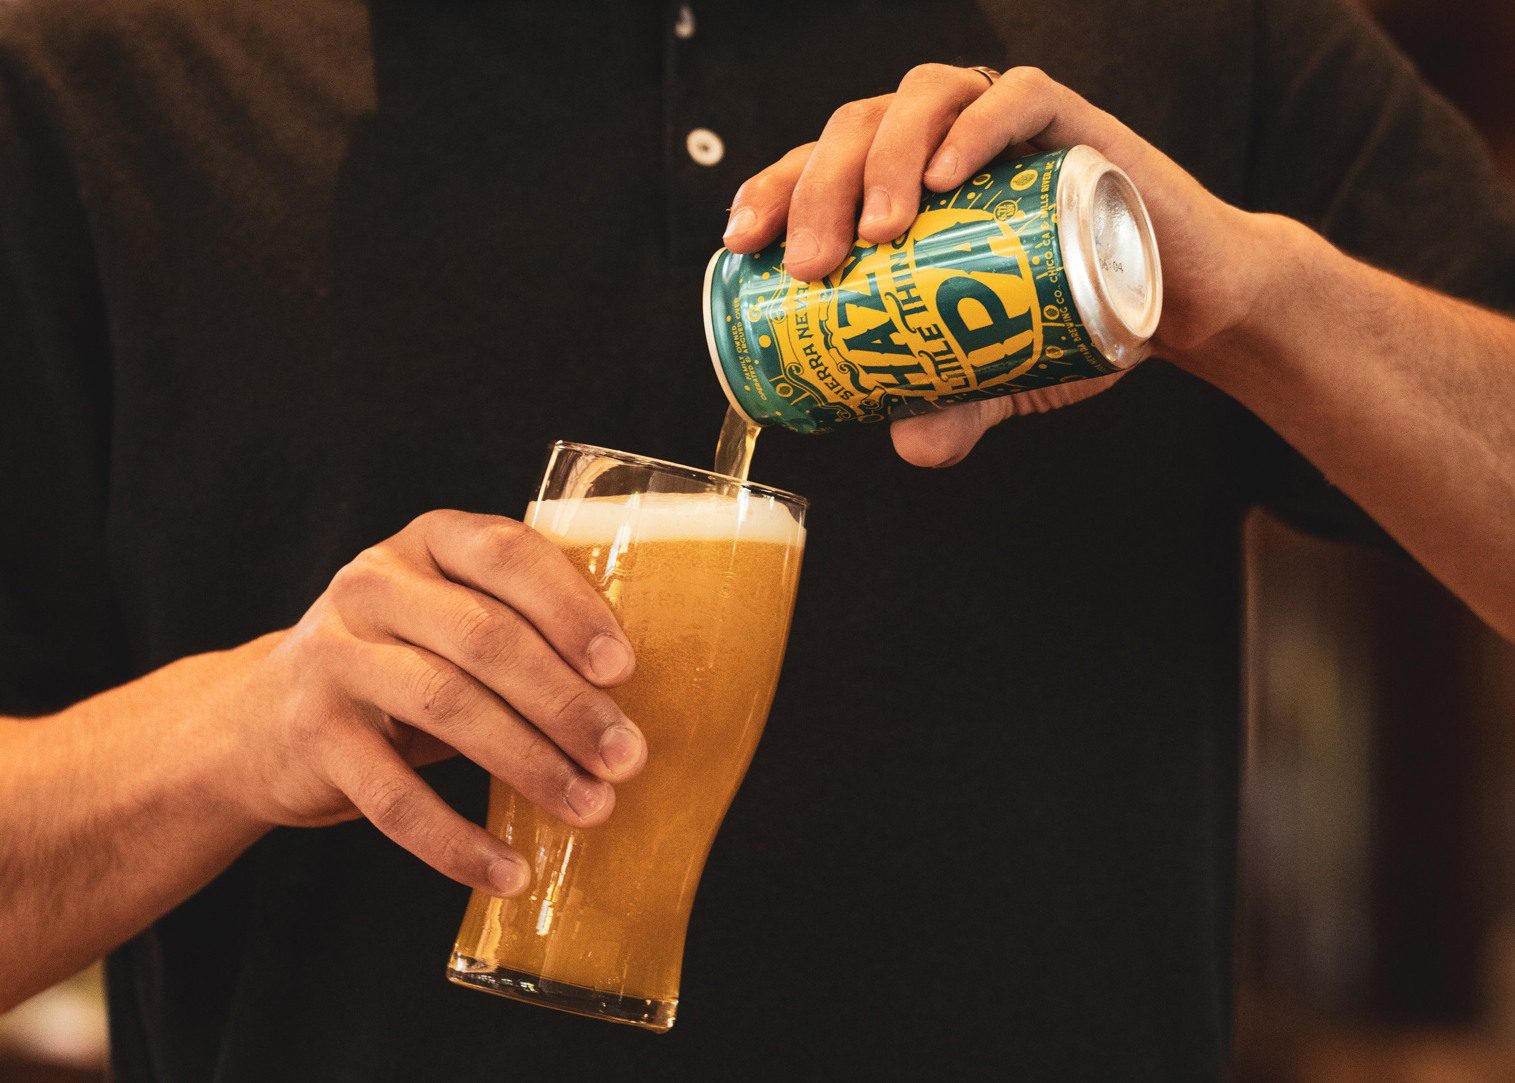 Draft Top Go Swing Beer Can Opener - American Made